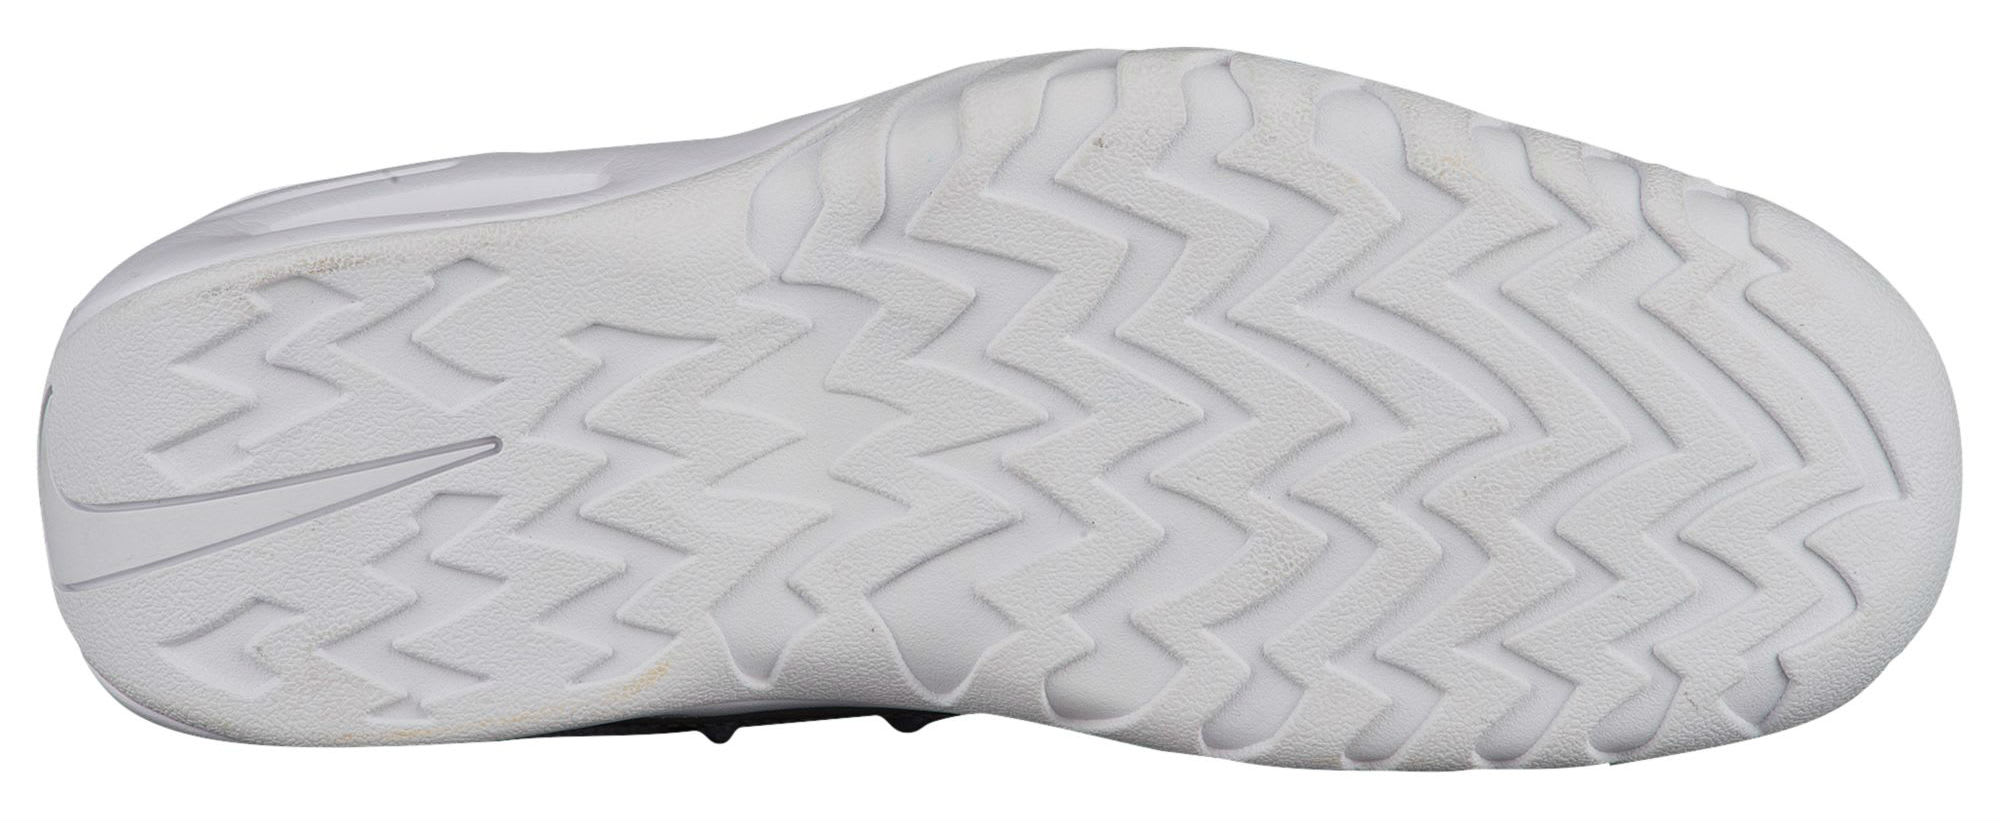 Nike Air Shake Ndestrukt All-White Release Date Sole 880869-101